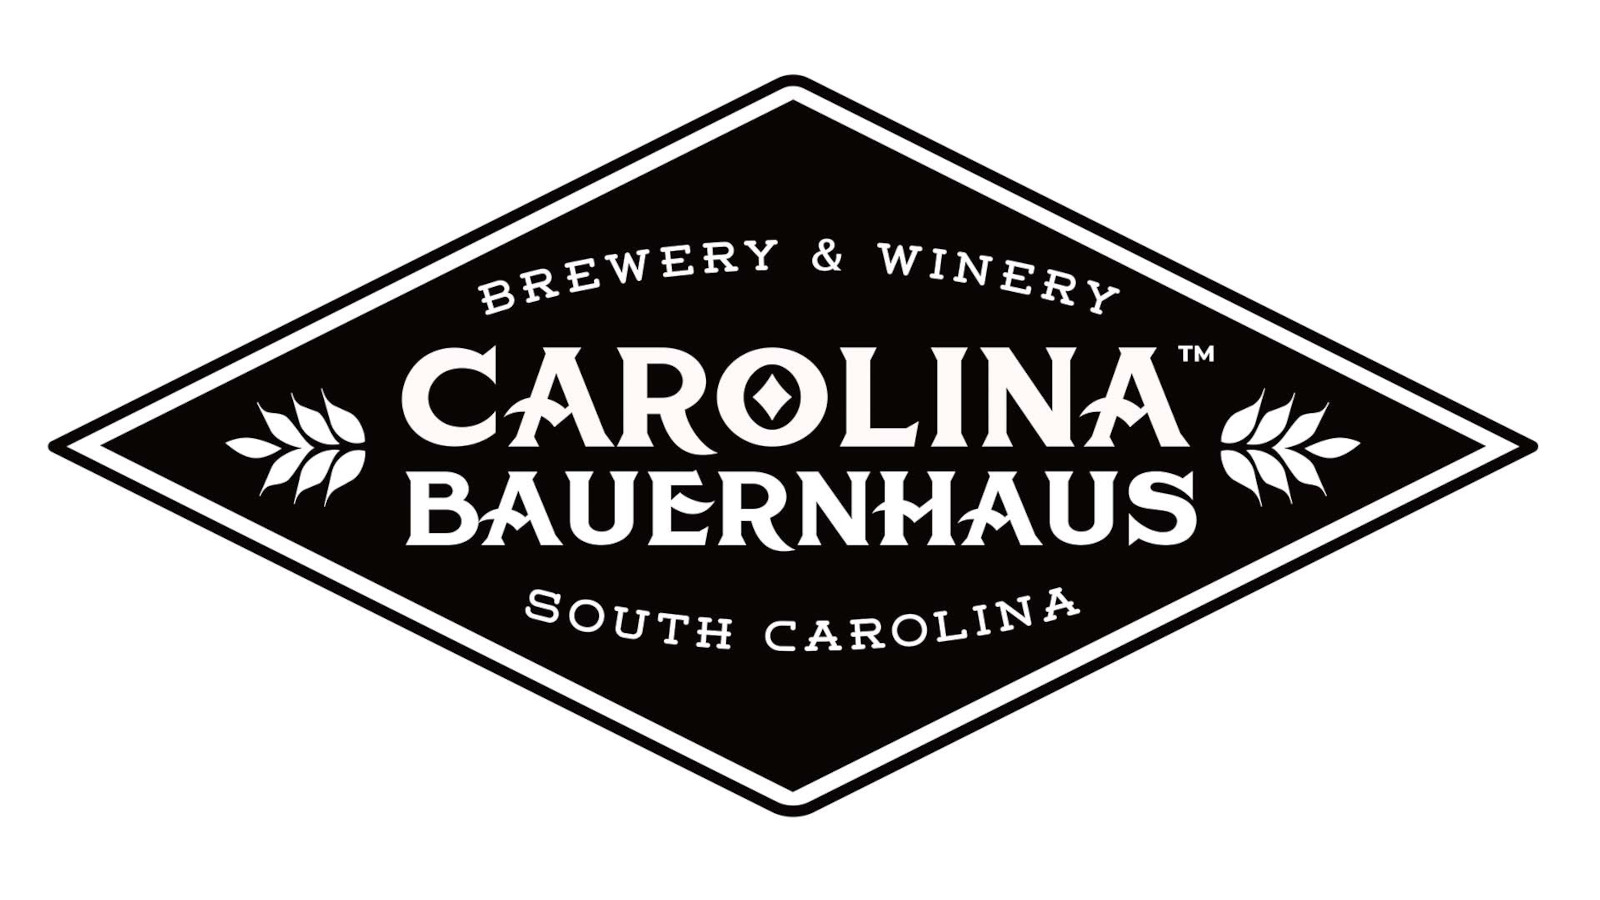 [$ 56.5] Carolina Bauernhaus Brewery & Winery $100 Gift Card US